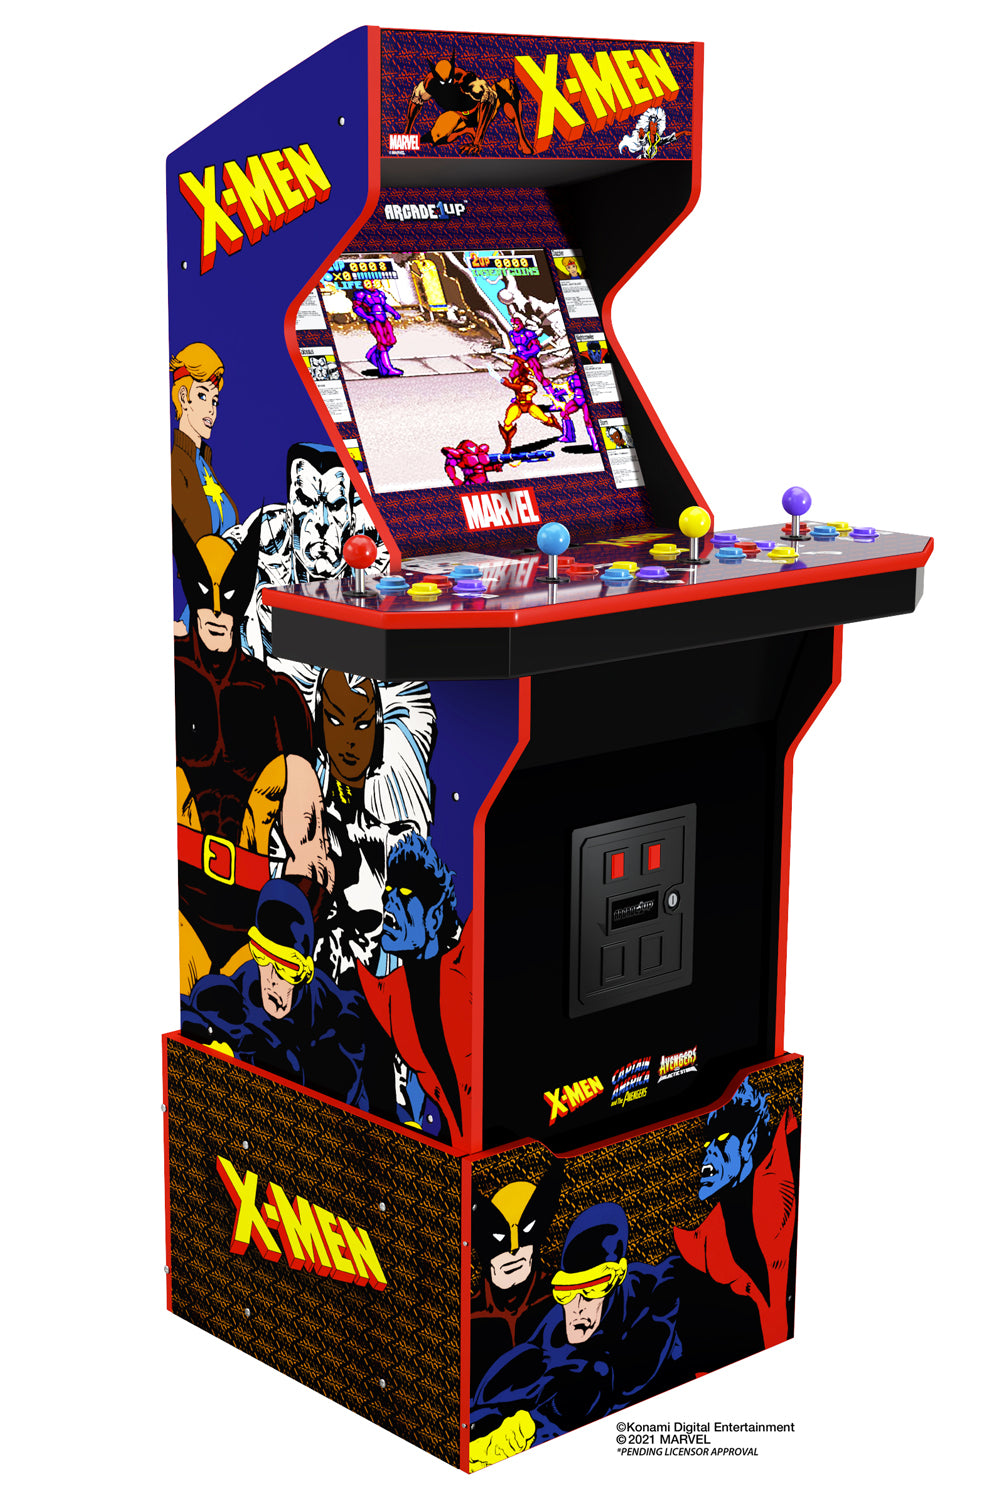 Arcade1Up Announces New 'X-Men' Arcade Cabinet and 'Pong' Pub Table